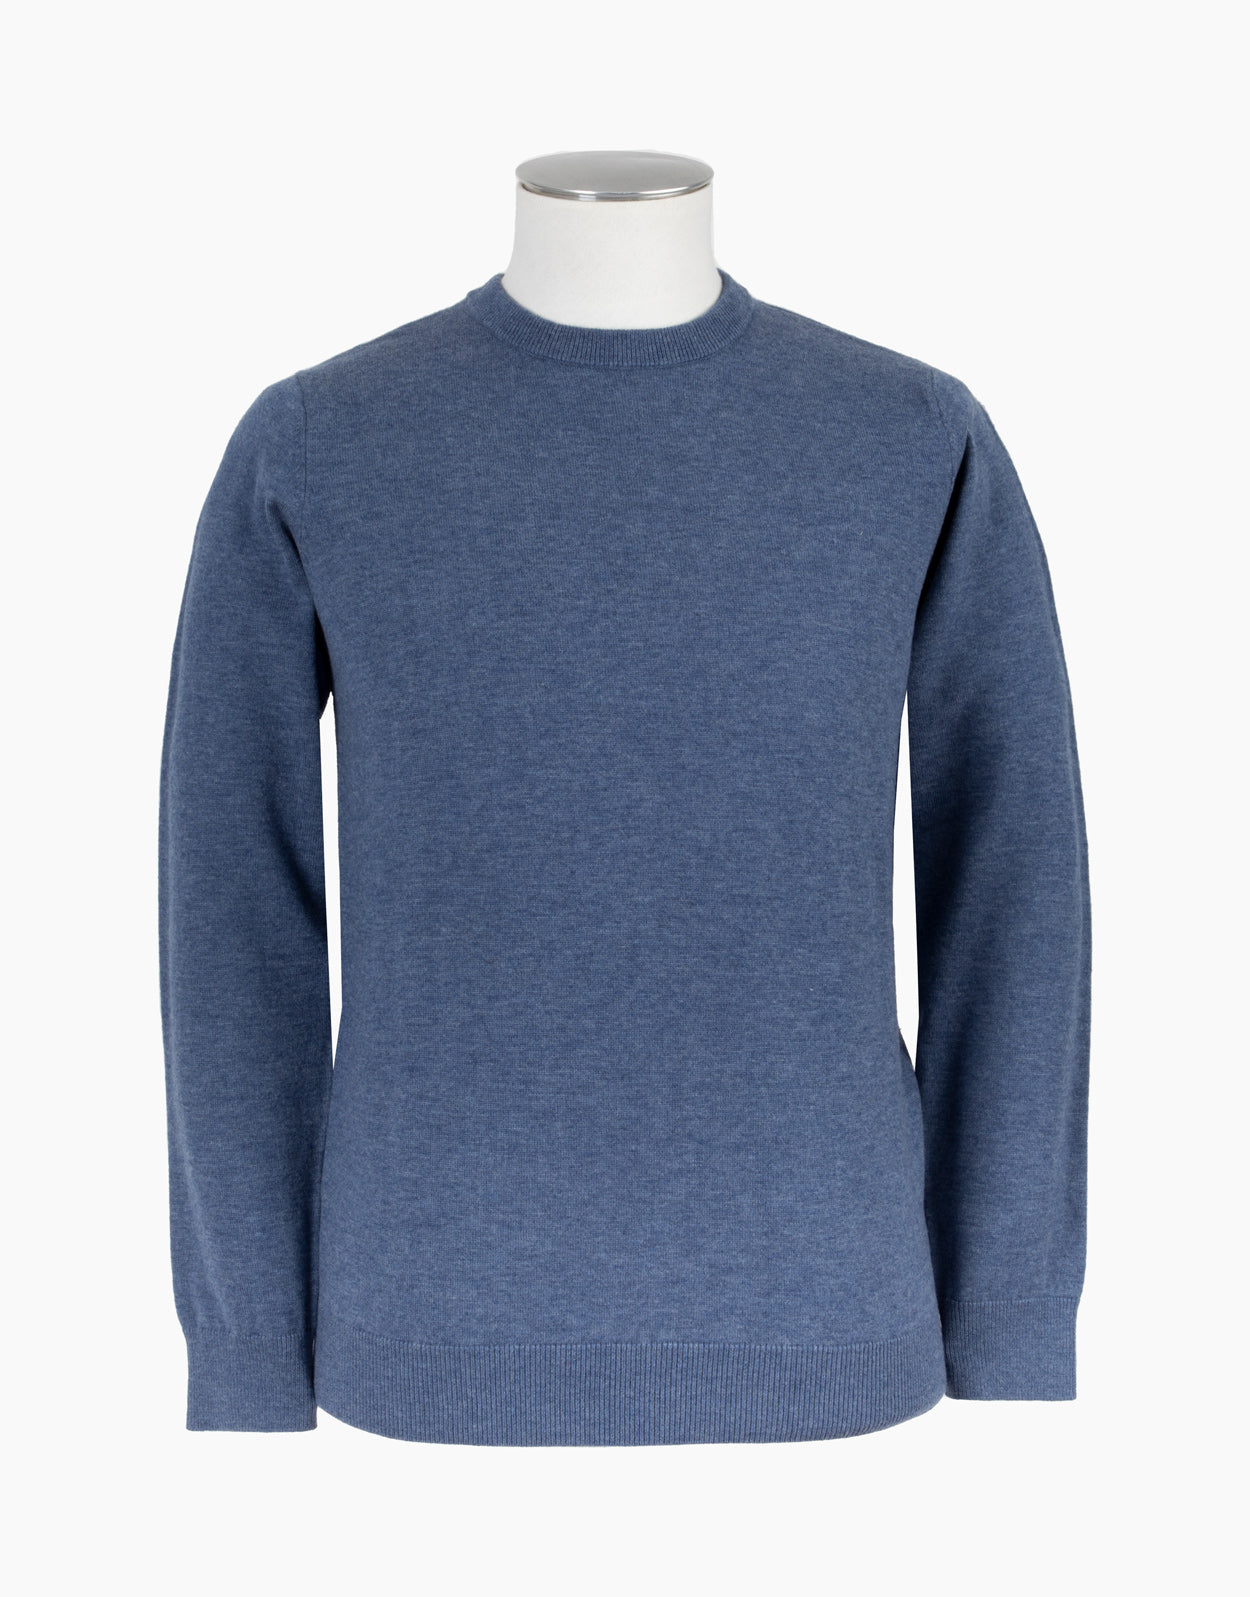 Rembrandt - Naseby Crew Neck Sweater - Blue